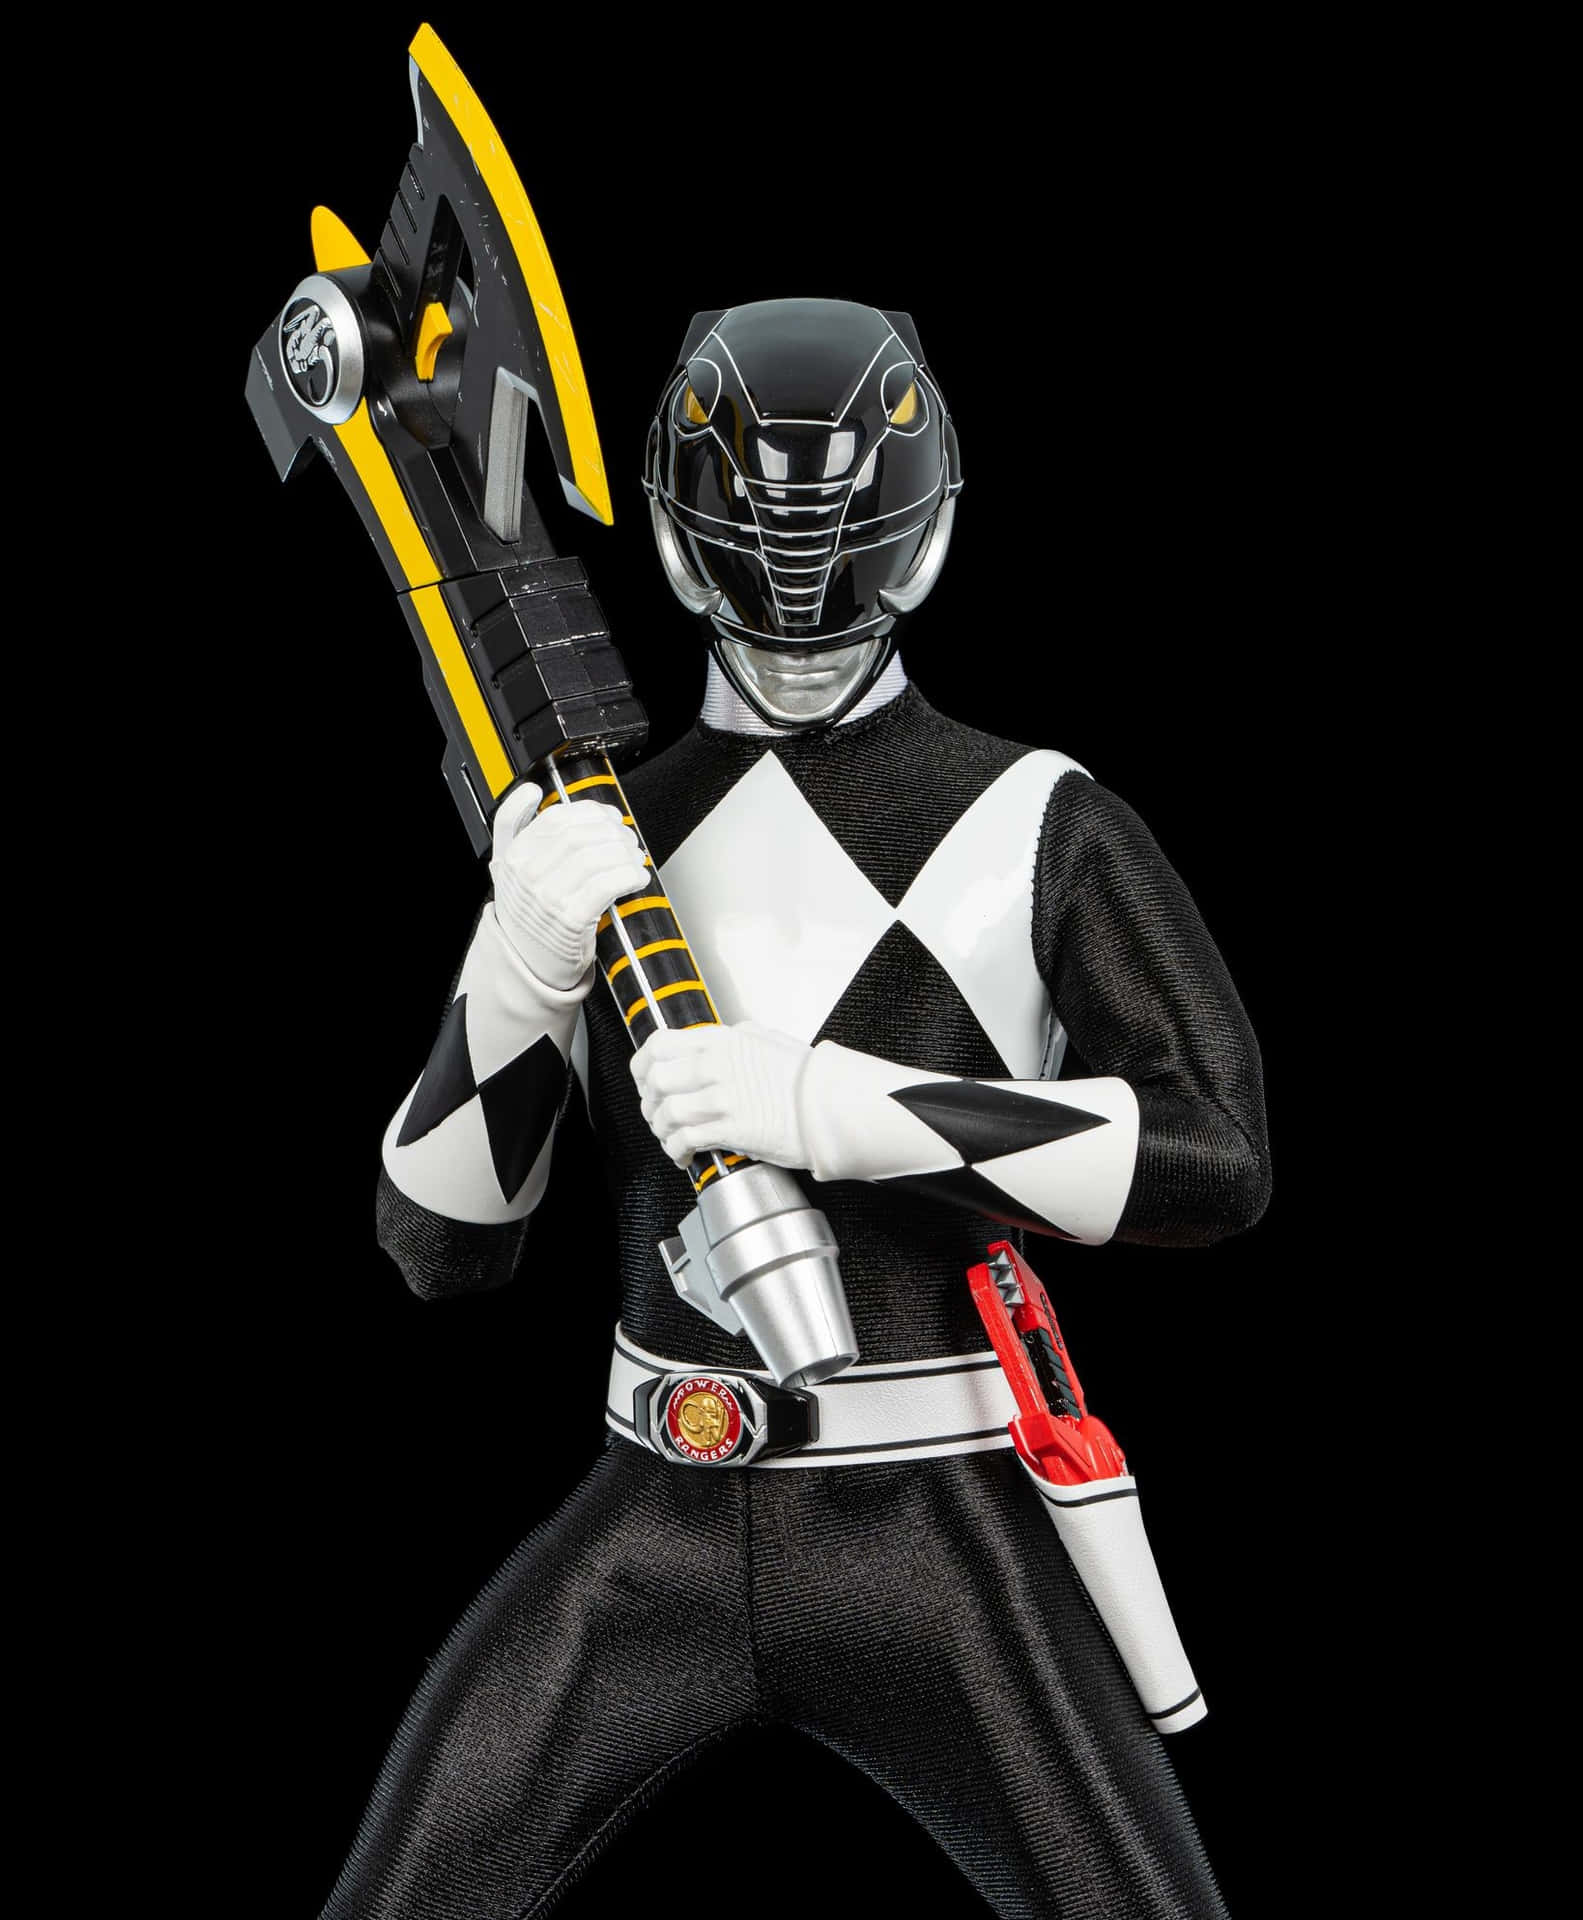 Black Ranger Posewith Axe Wallpaper